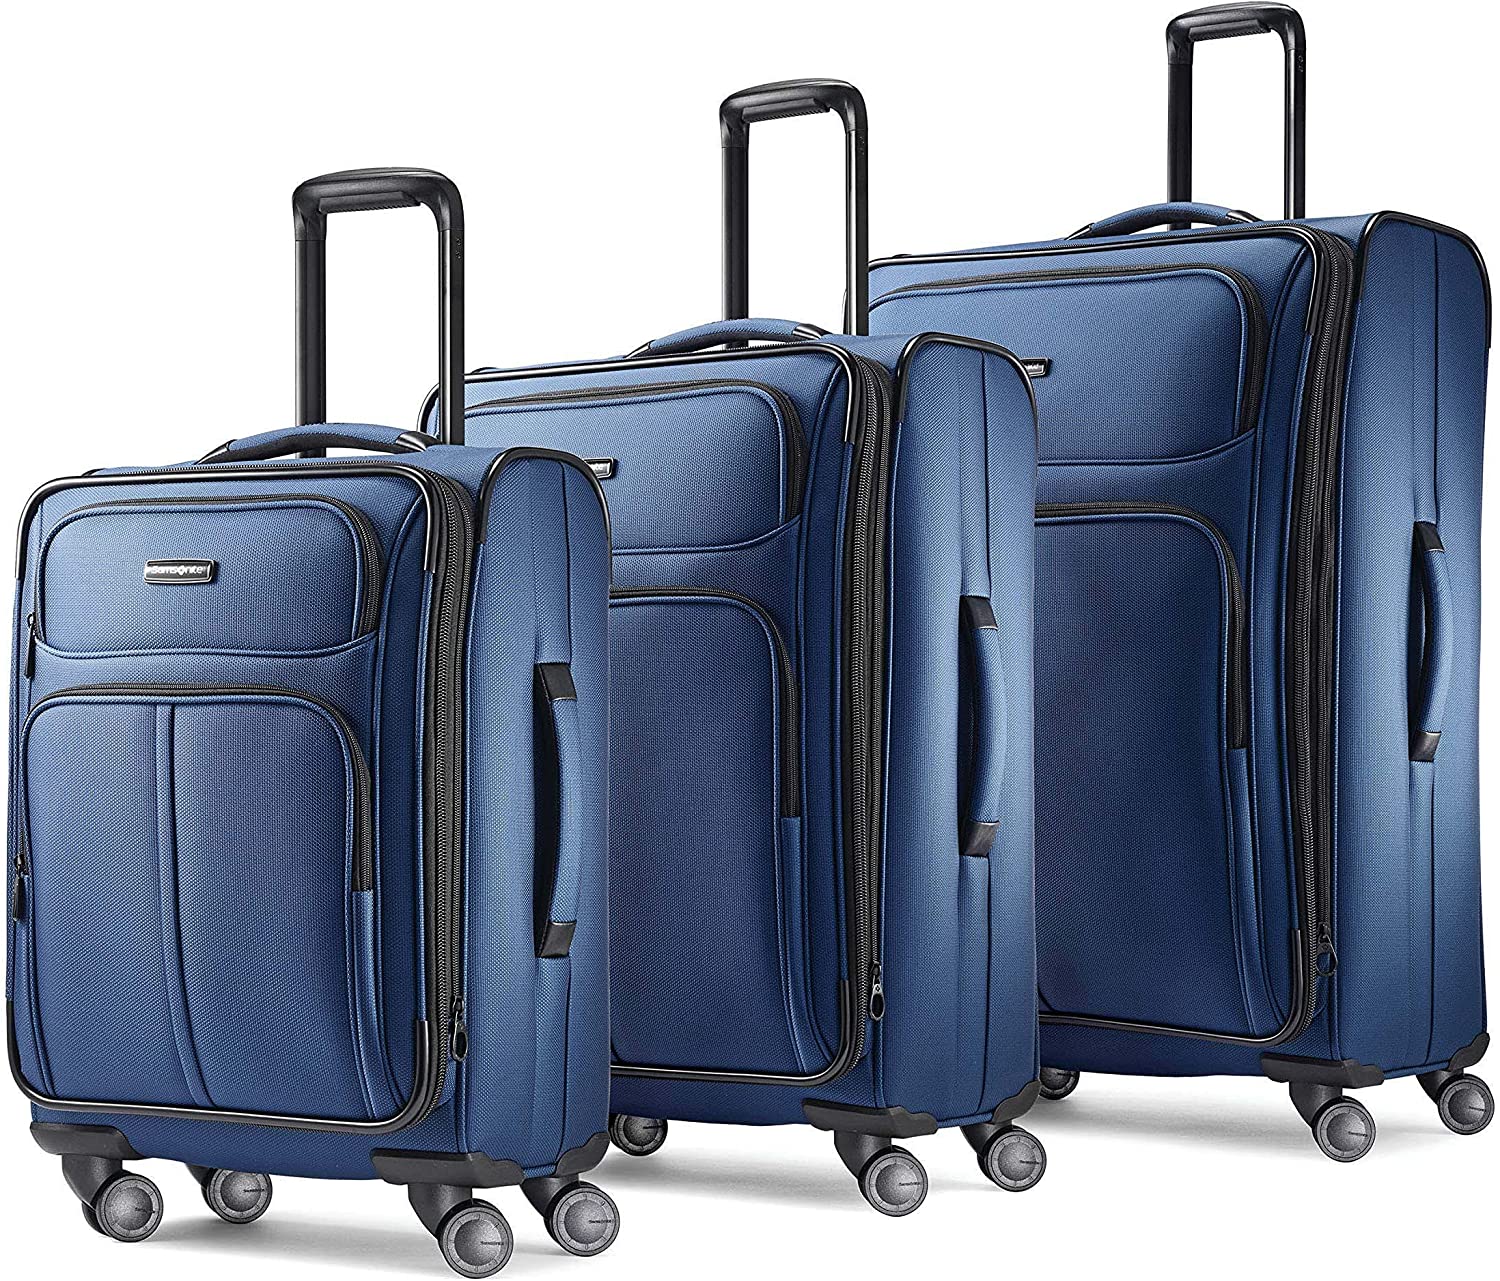 Samsonite luggage set 